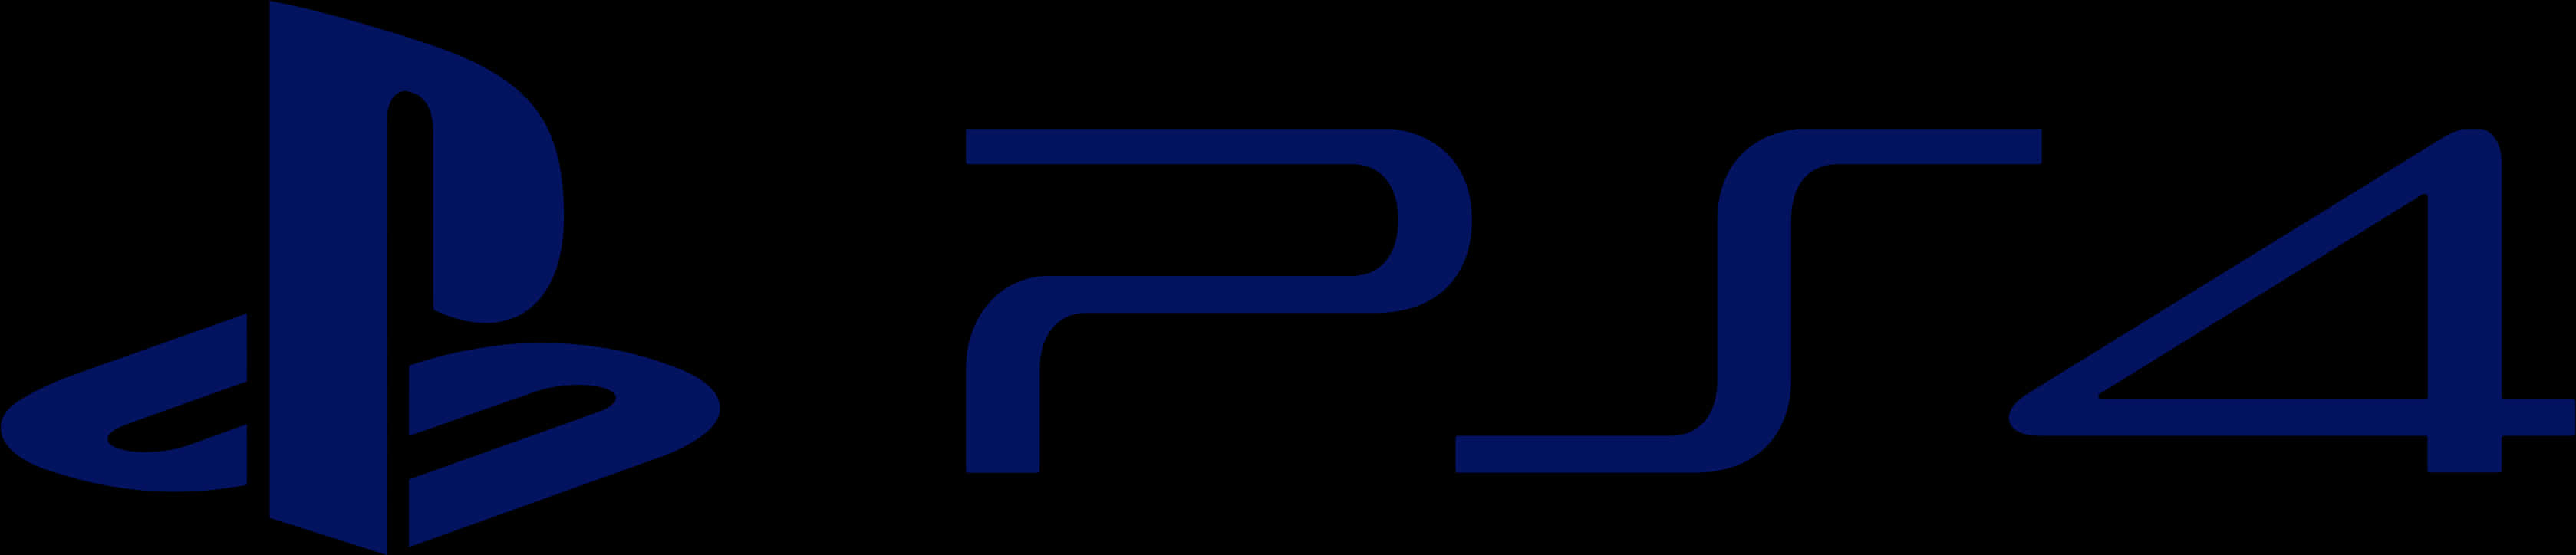 Play Station4 Logo Blue PNG image